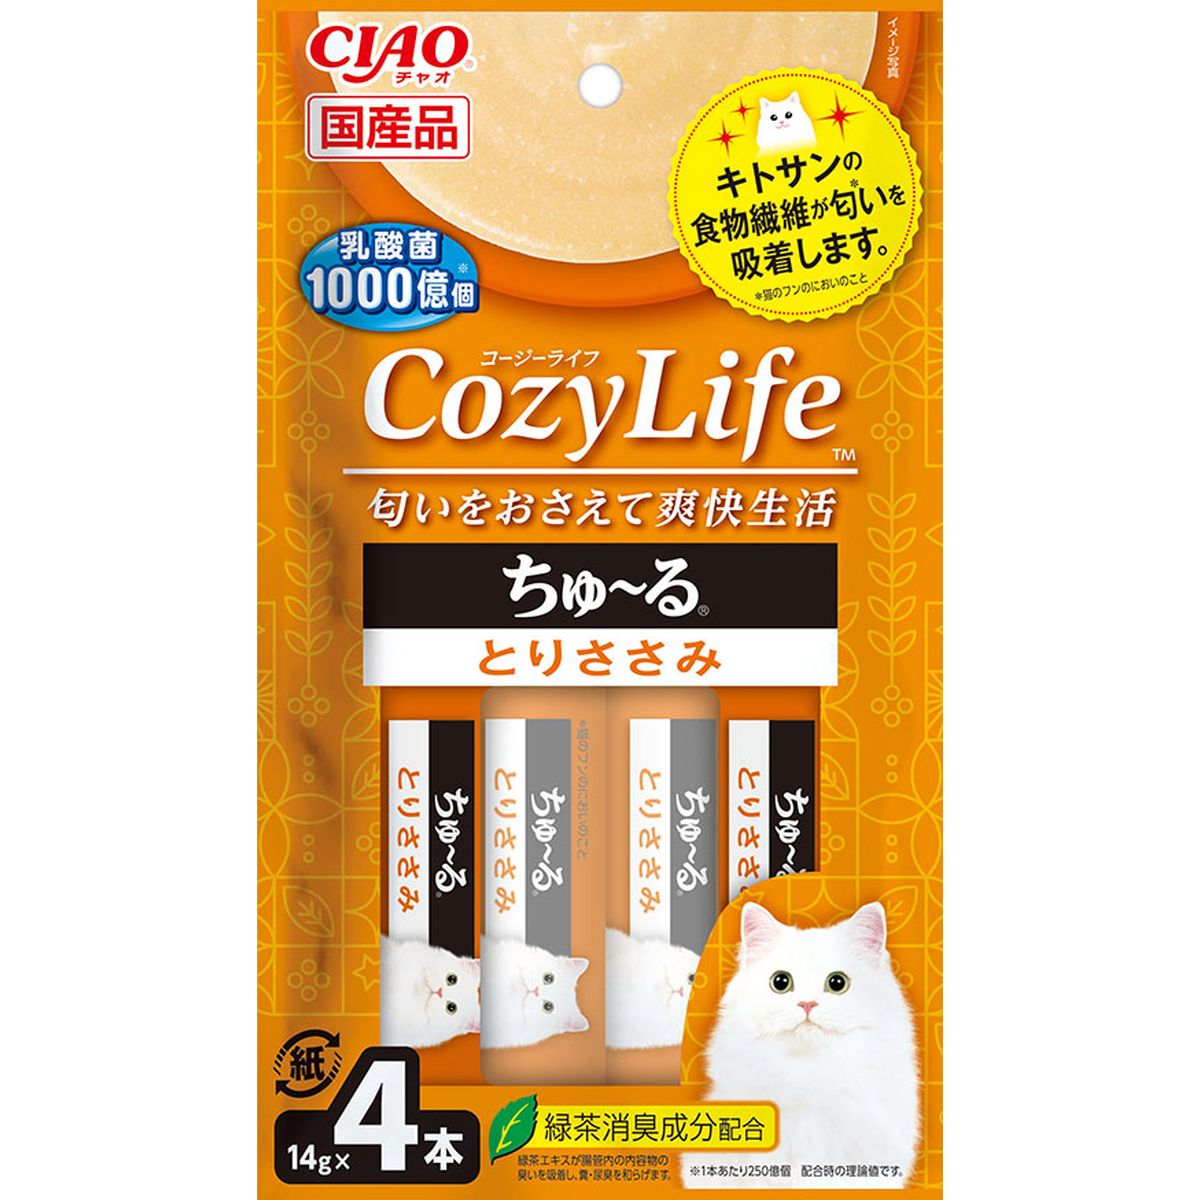 CIAO Cozy Lifeチュール トリササミ 4本×48